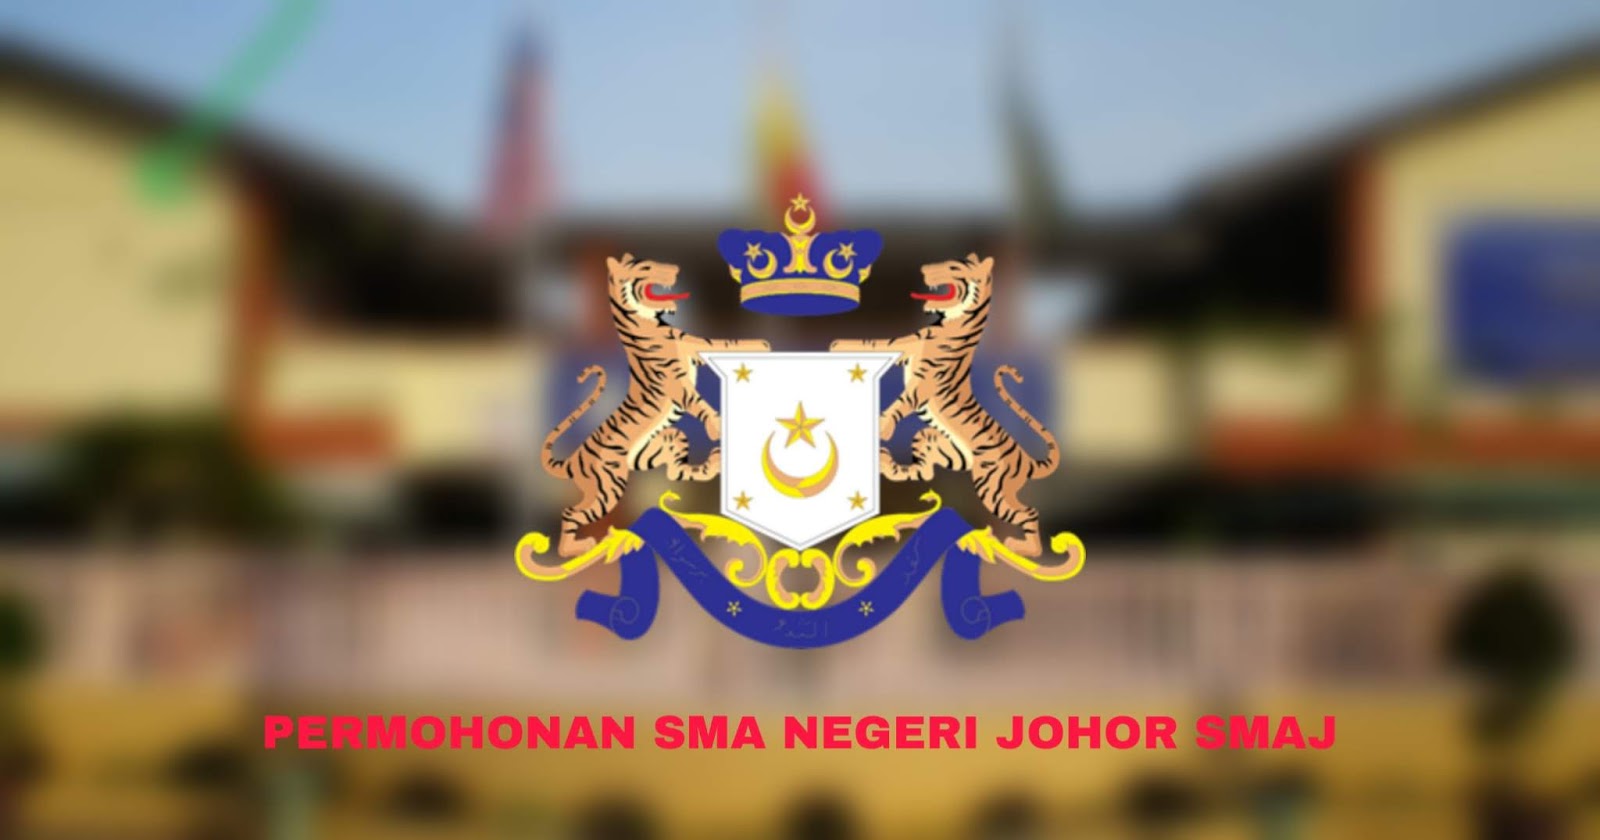 Permohonan SMA Negeri Johor 2020 Online